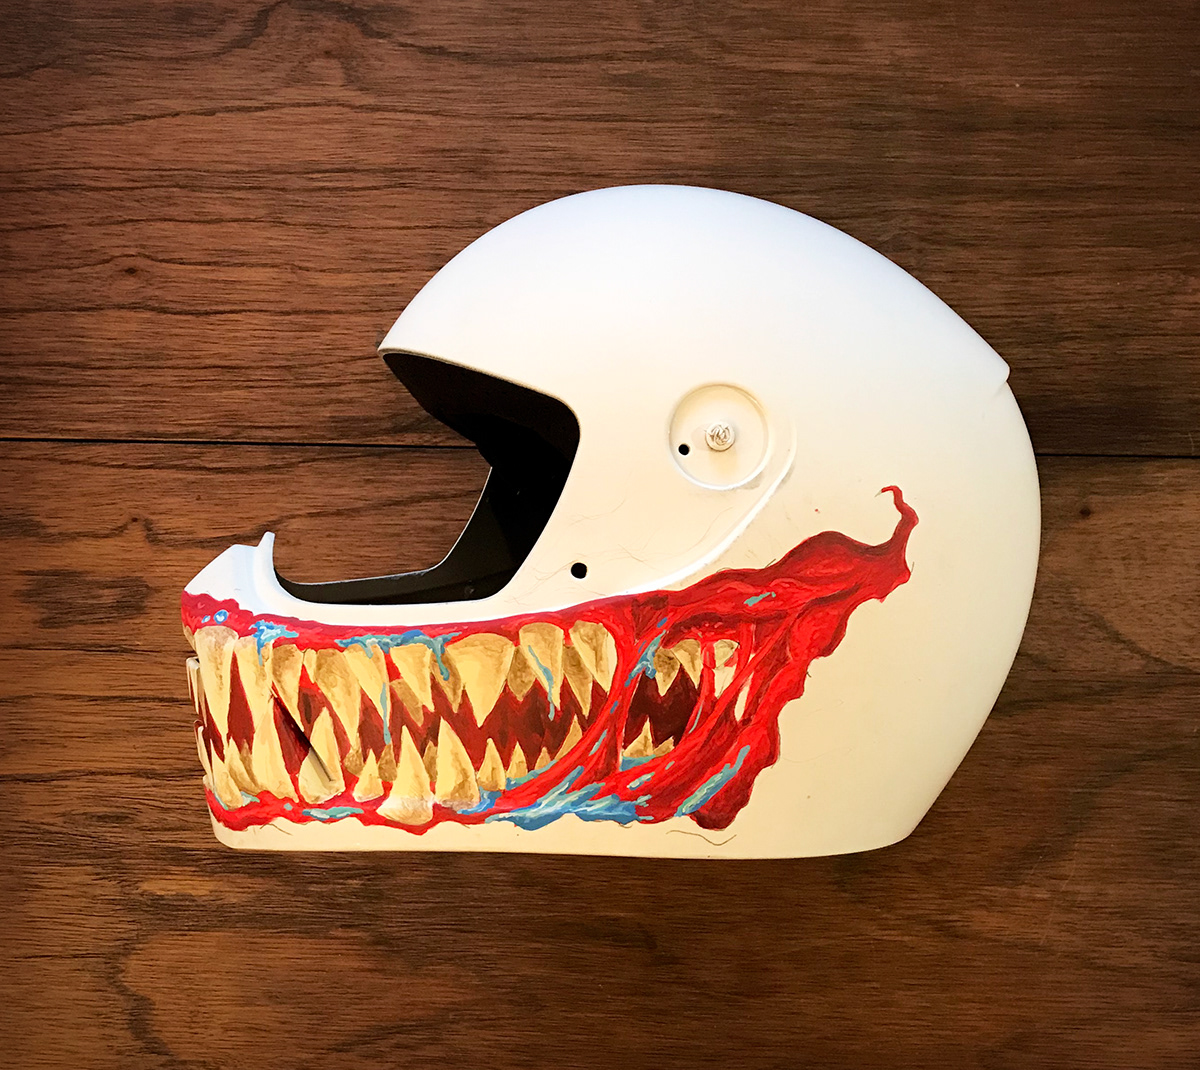 Helmet motorcicle motorbike motocicleta kustom culture custom Custom ilustrador argentina Graphic Designer